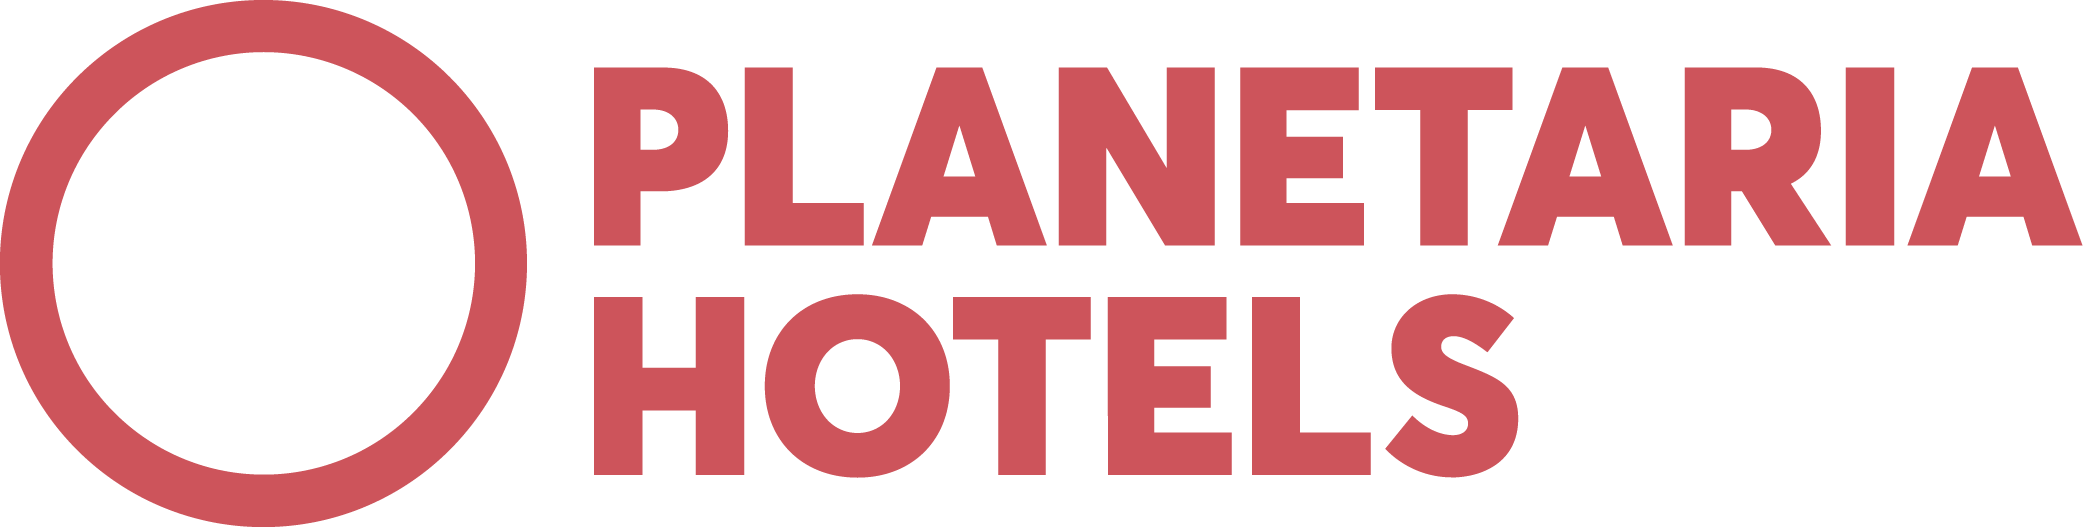 PLANETARIA HOTELS